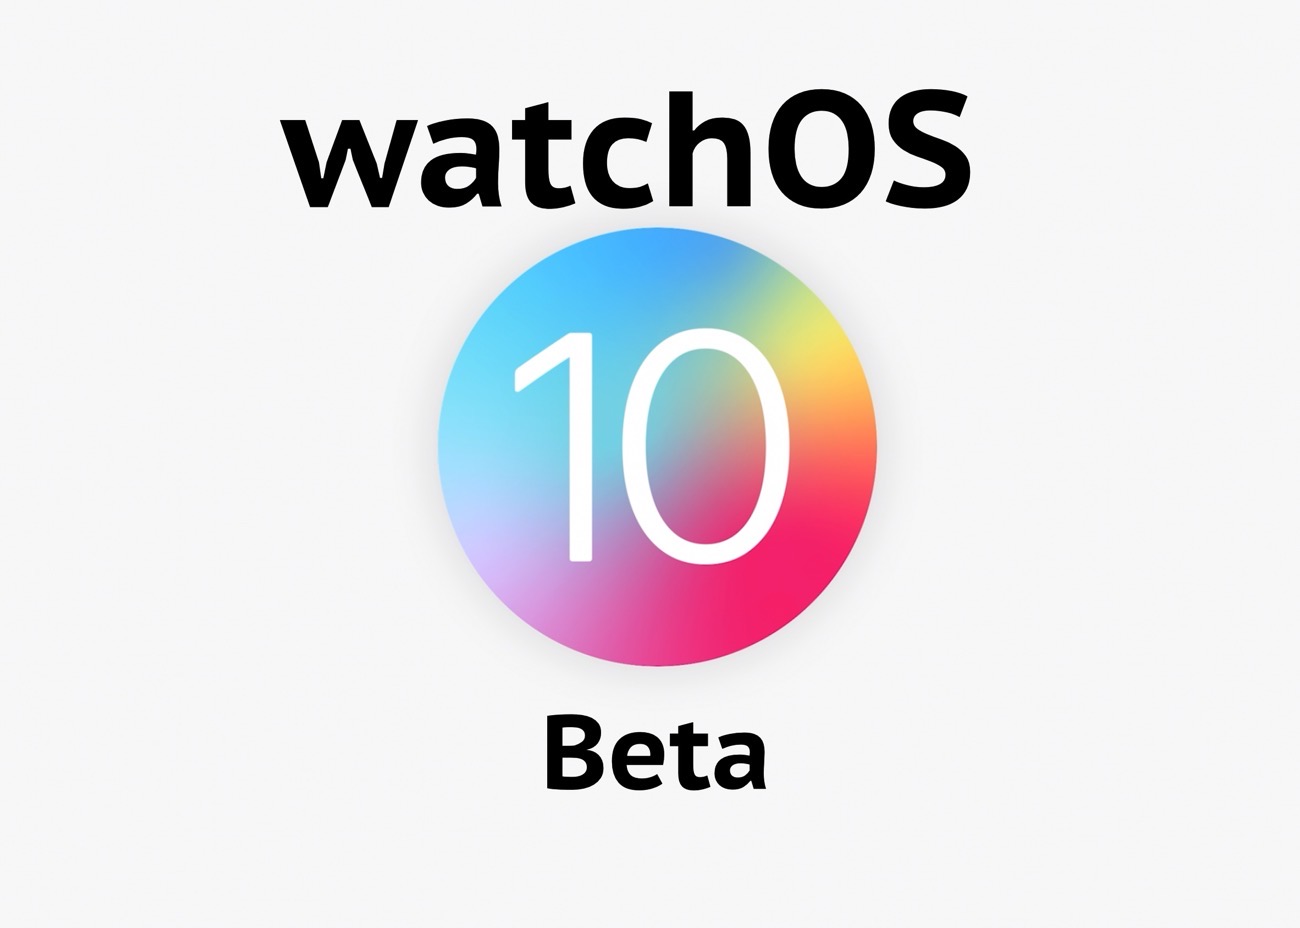 Apple、「watchOS 10.2 Release Candidate (21S364)」を開発者にリリース